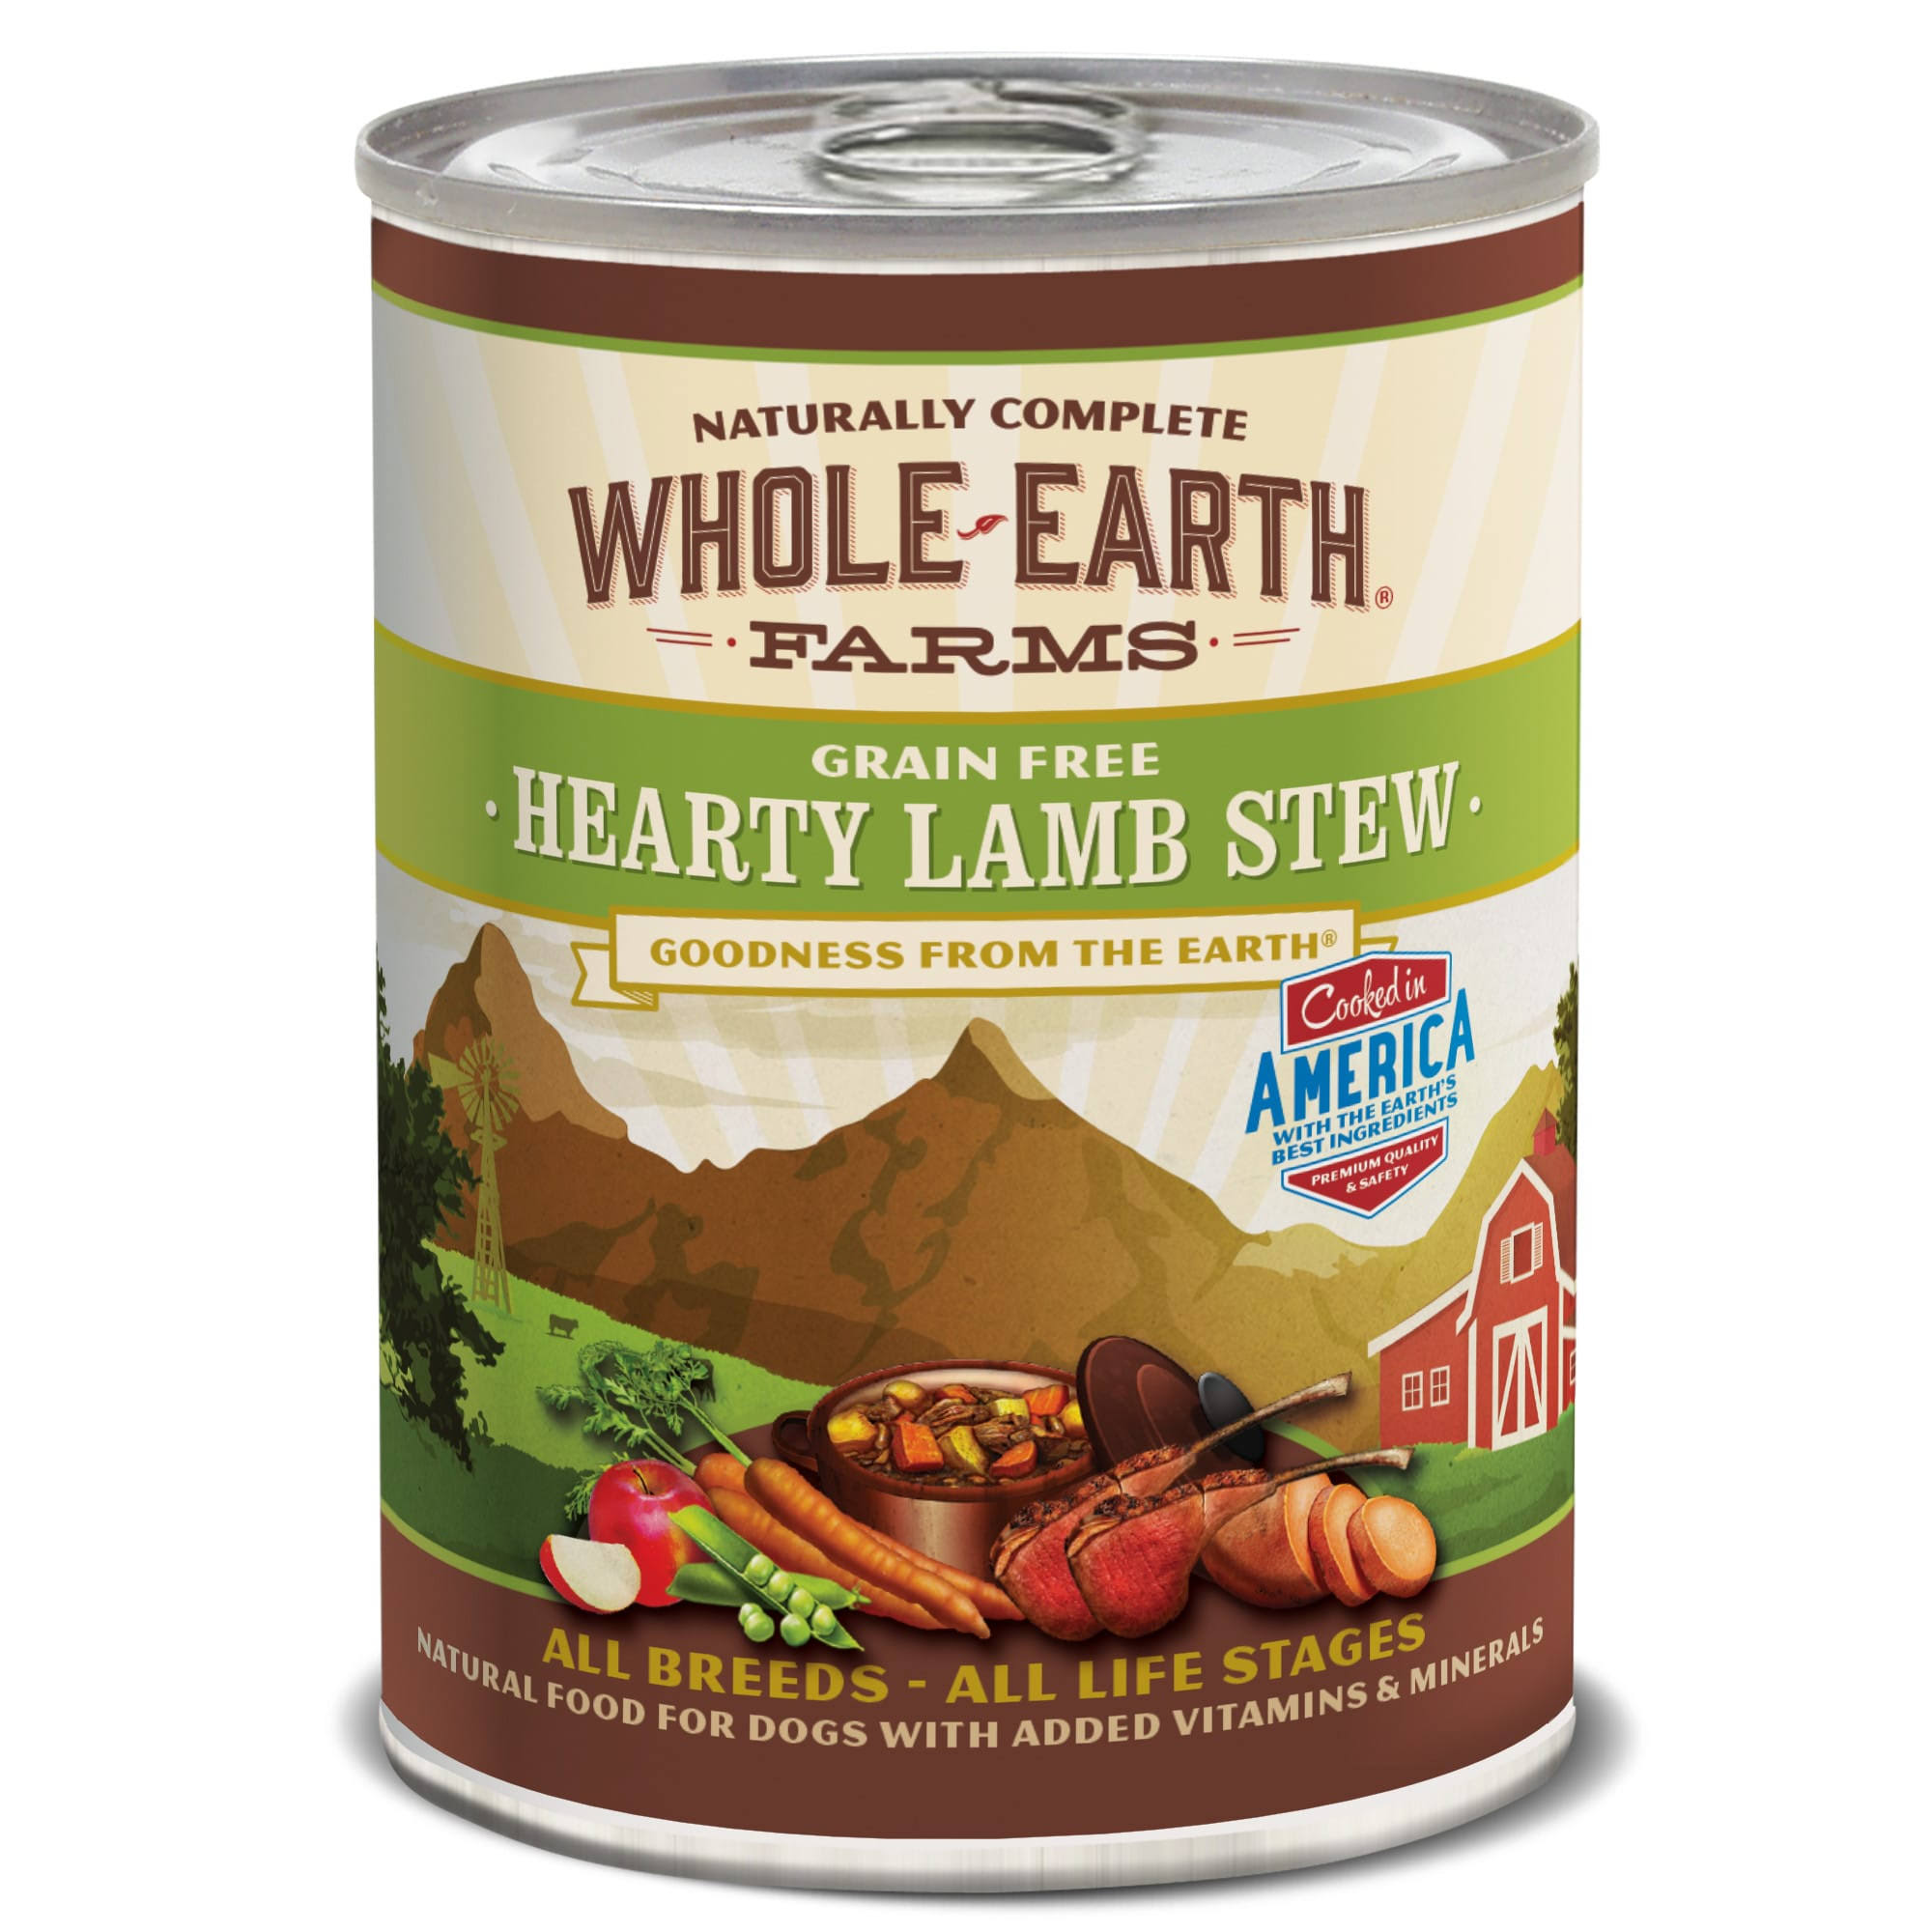 Whole Earth Farms Grain Free Canned Dog Food - Hearty Lamb Stew, 12.7oz